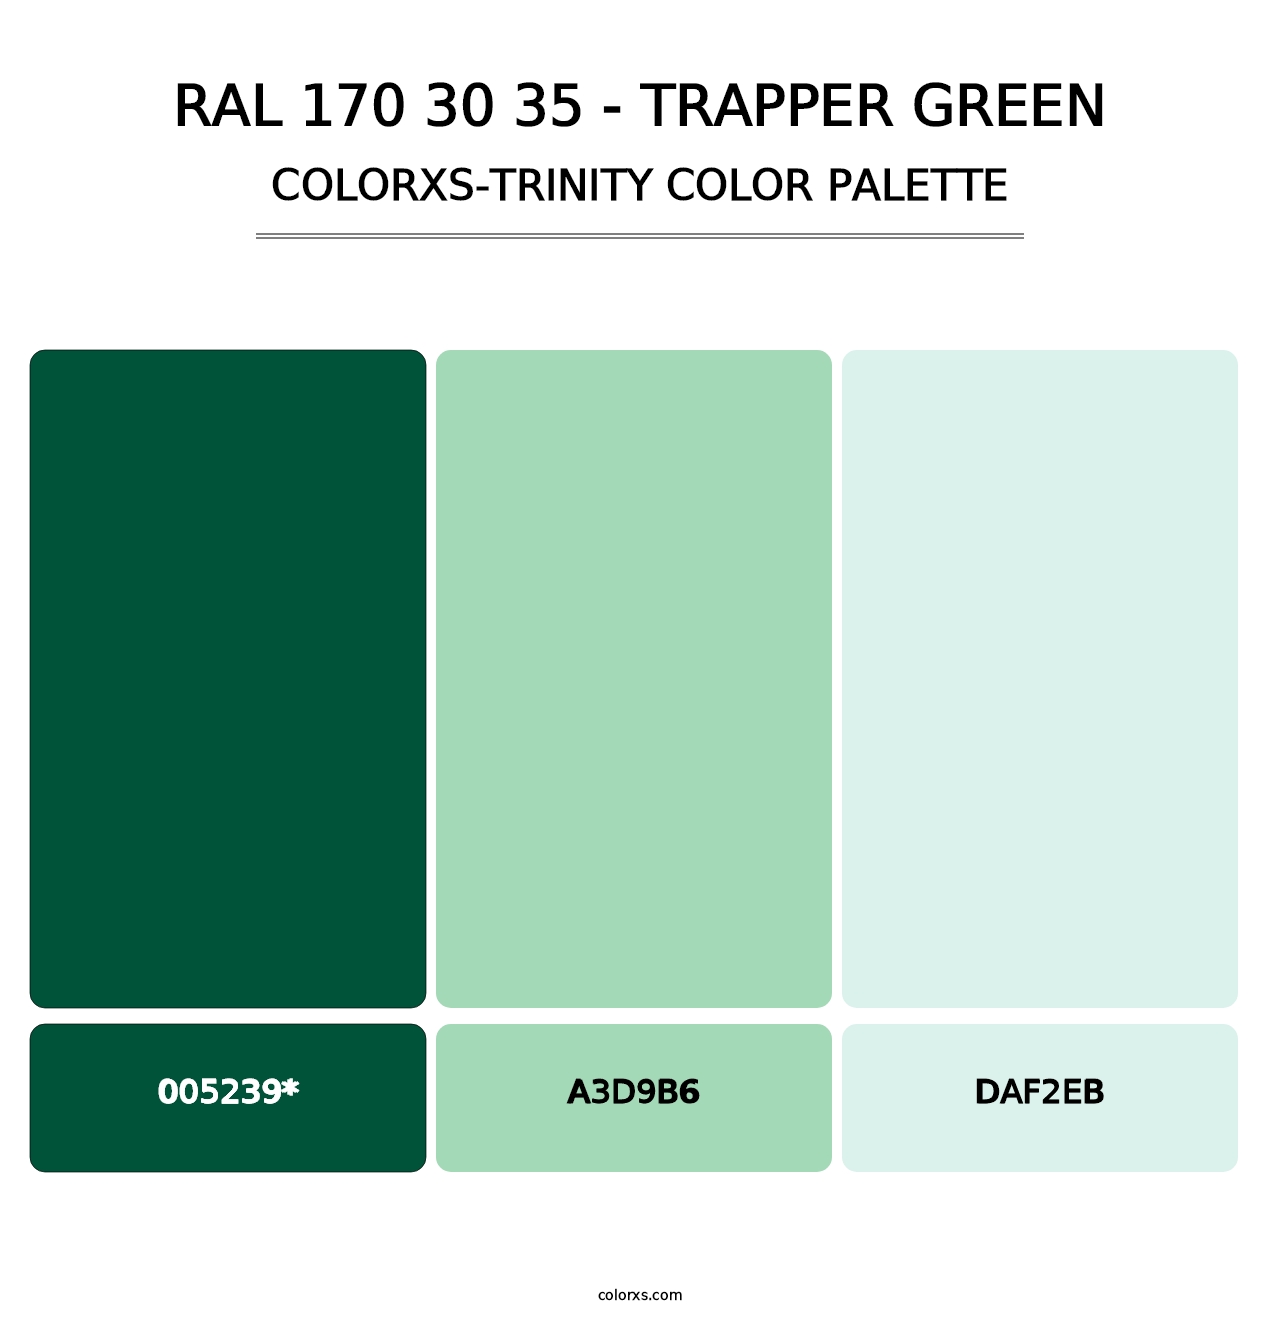 RAL 170 30 35 - Trapper Green - Colorxs Trinity Palette